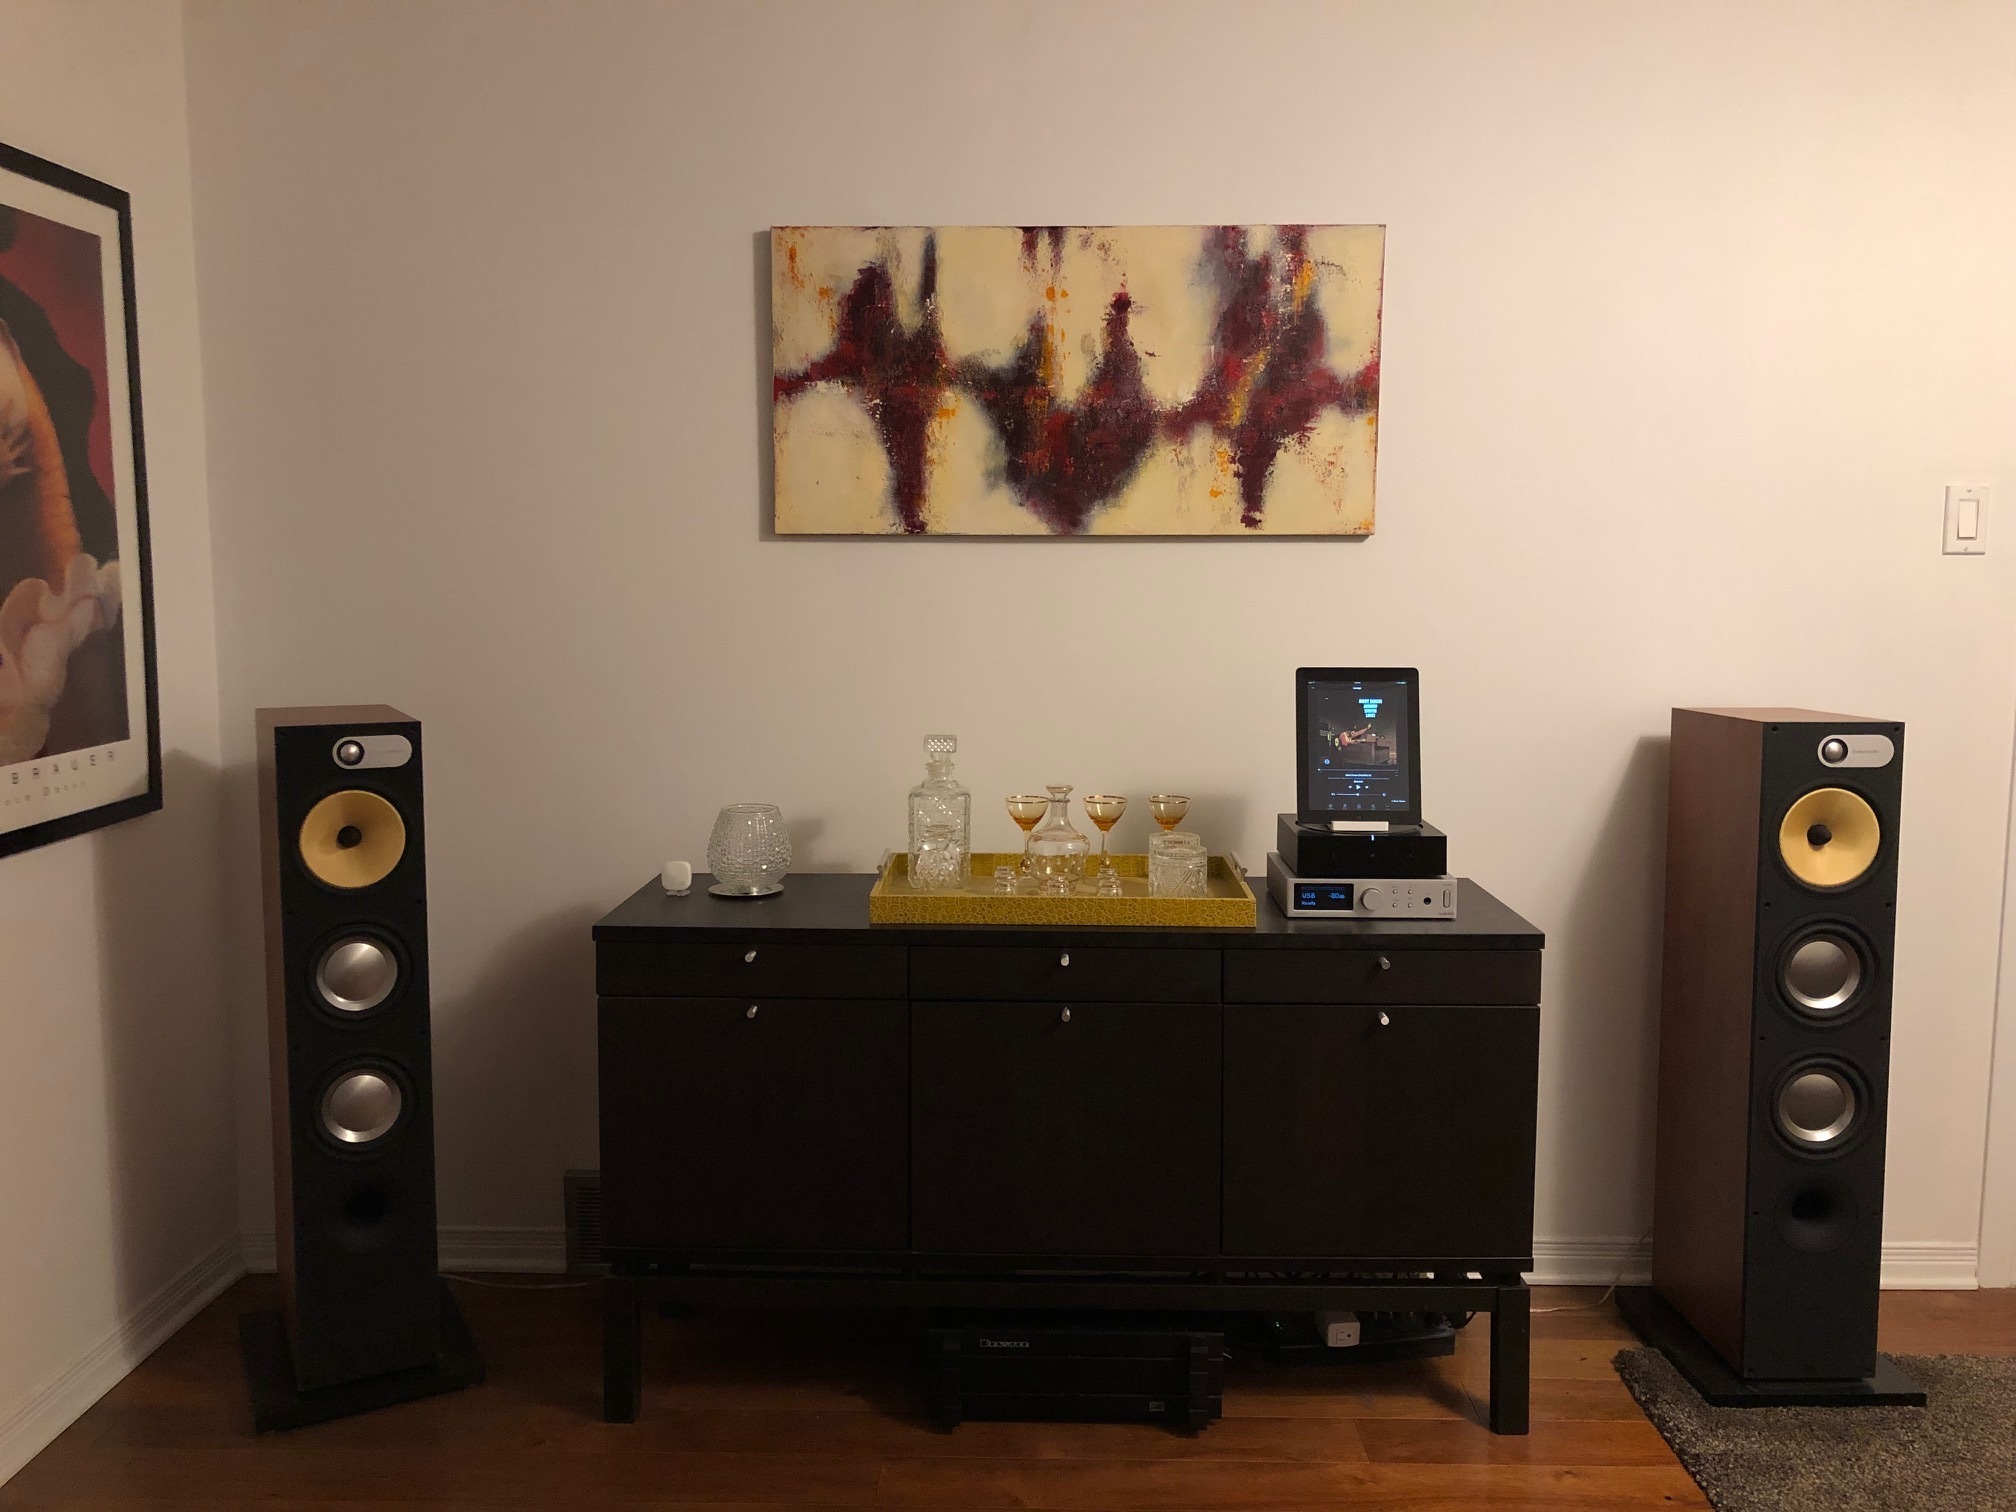 Uafhængig Invitere ært My Sonos Amp Review. | Sonos Community